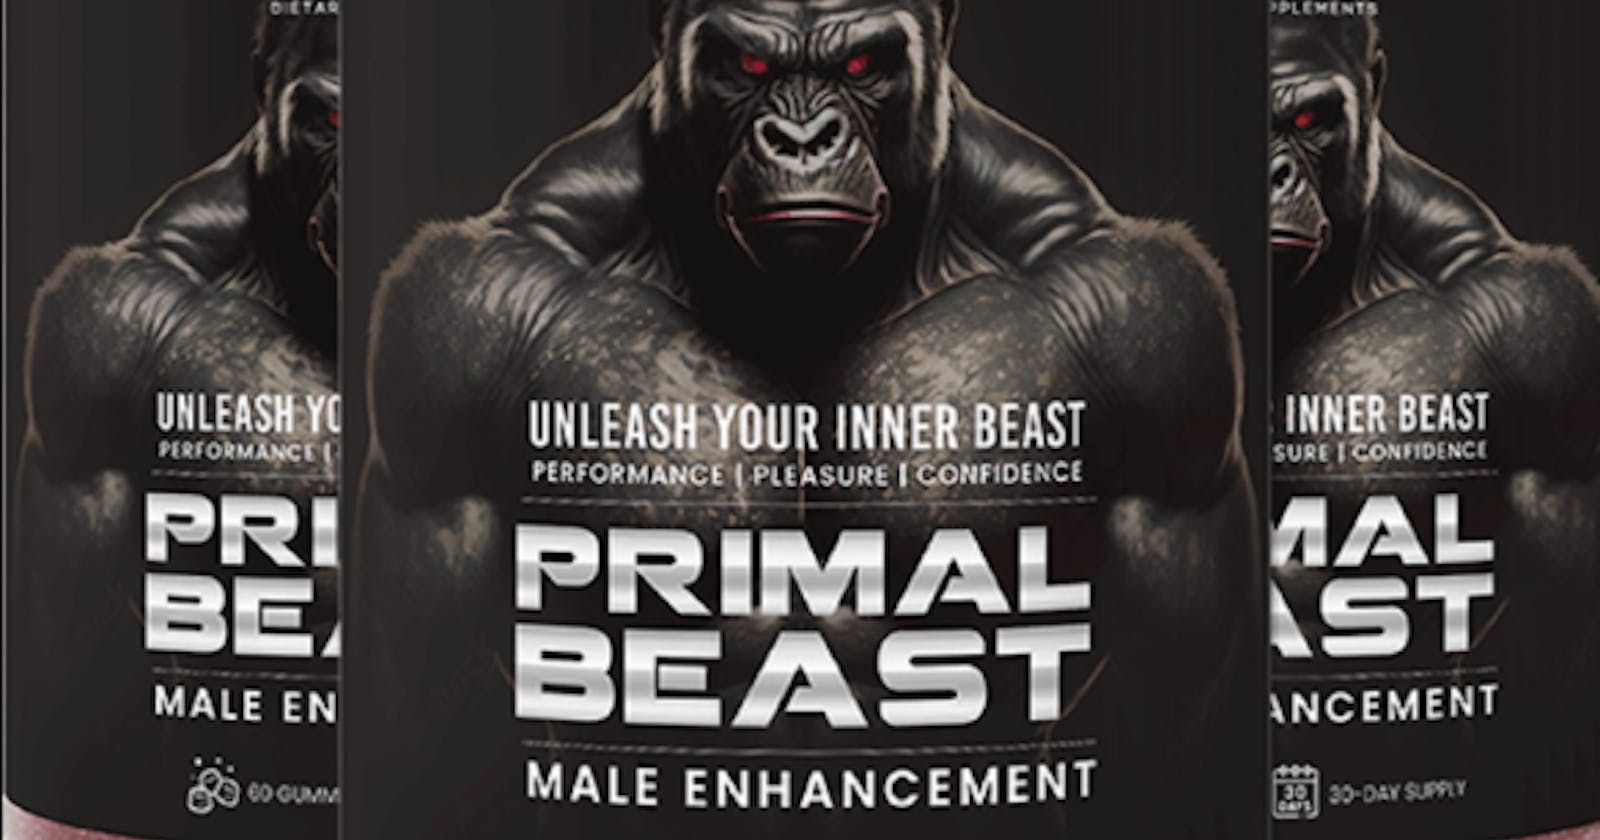 Primal Beast Male Enhancement Pills Reviews?